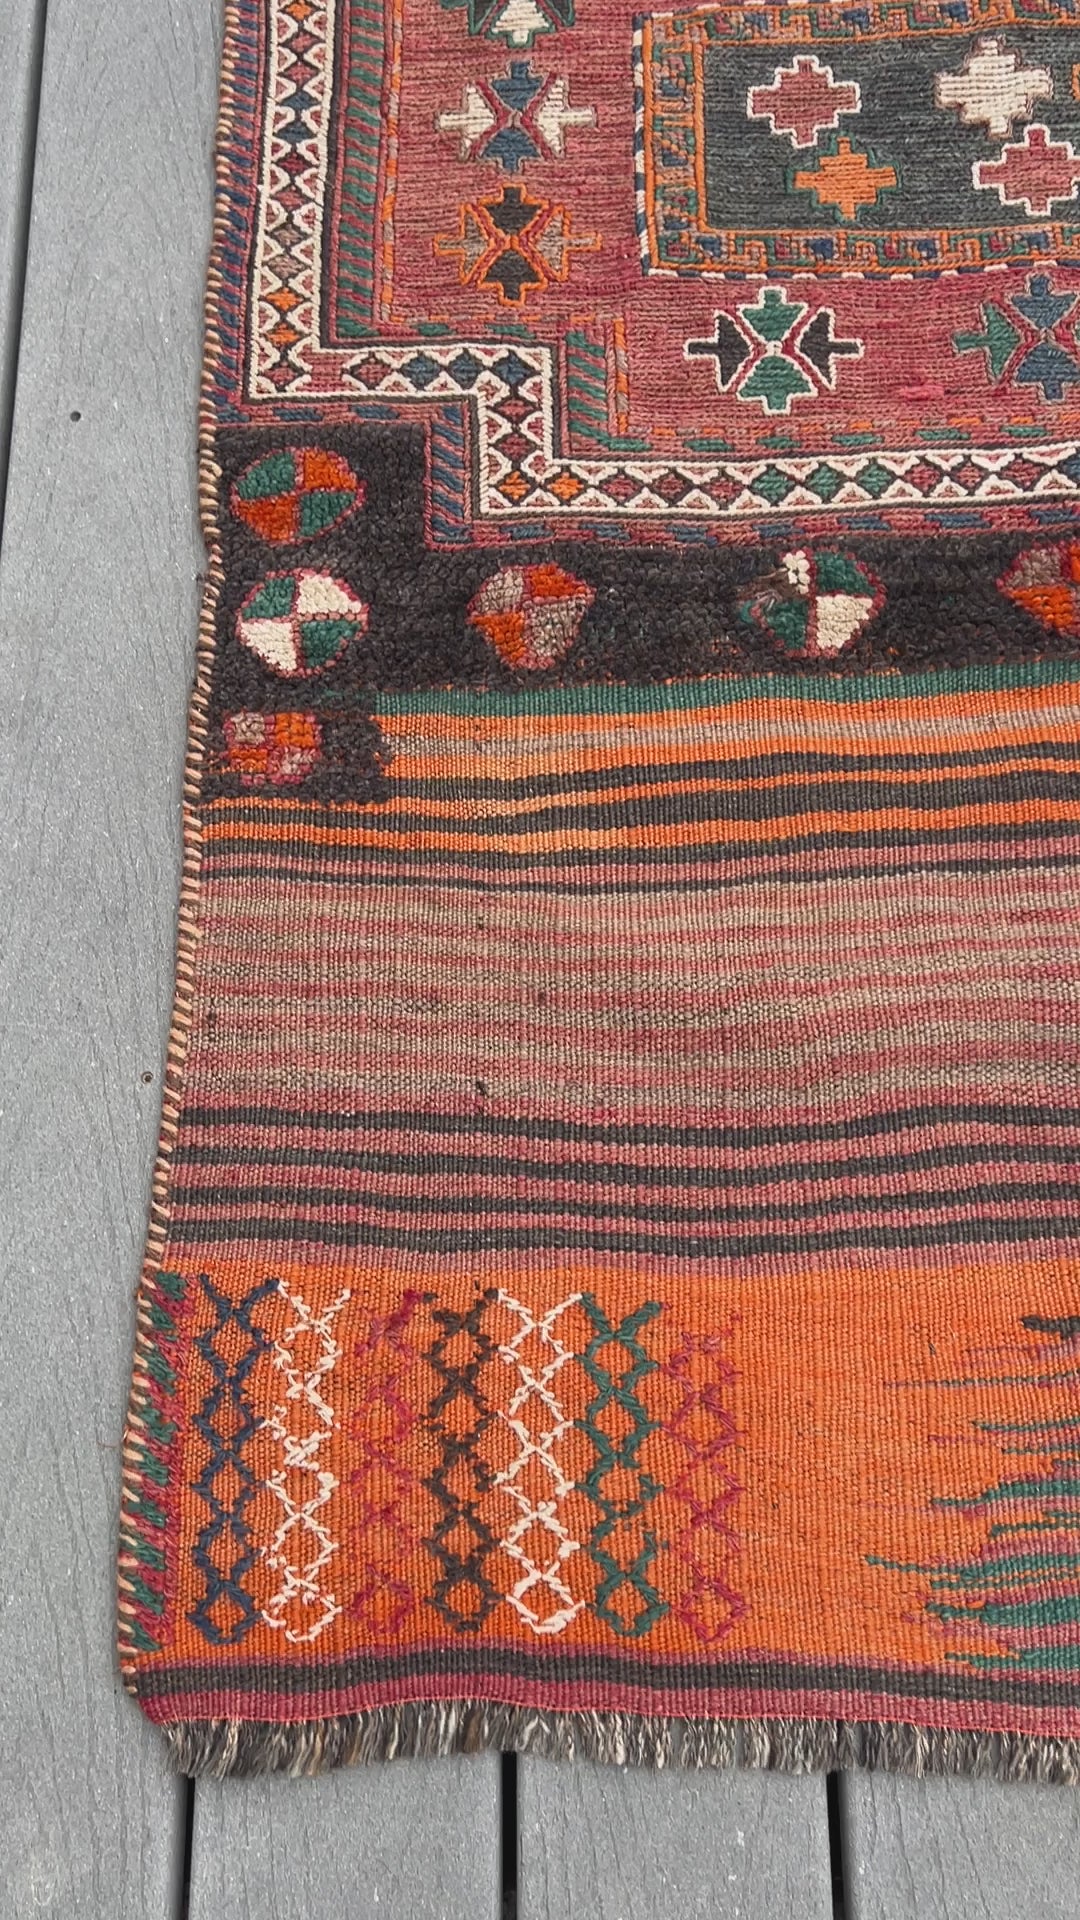 Small Persian Runner. Bakhtiari Saddle bag. Oriental rug palo alto berkeley. Vintage rug San Francisco Los Alto Los Gatos. Buy rug online free shipping to USA, Canada, toronto, california.